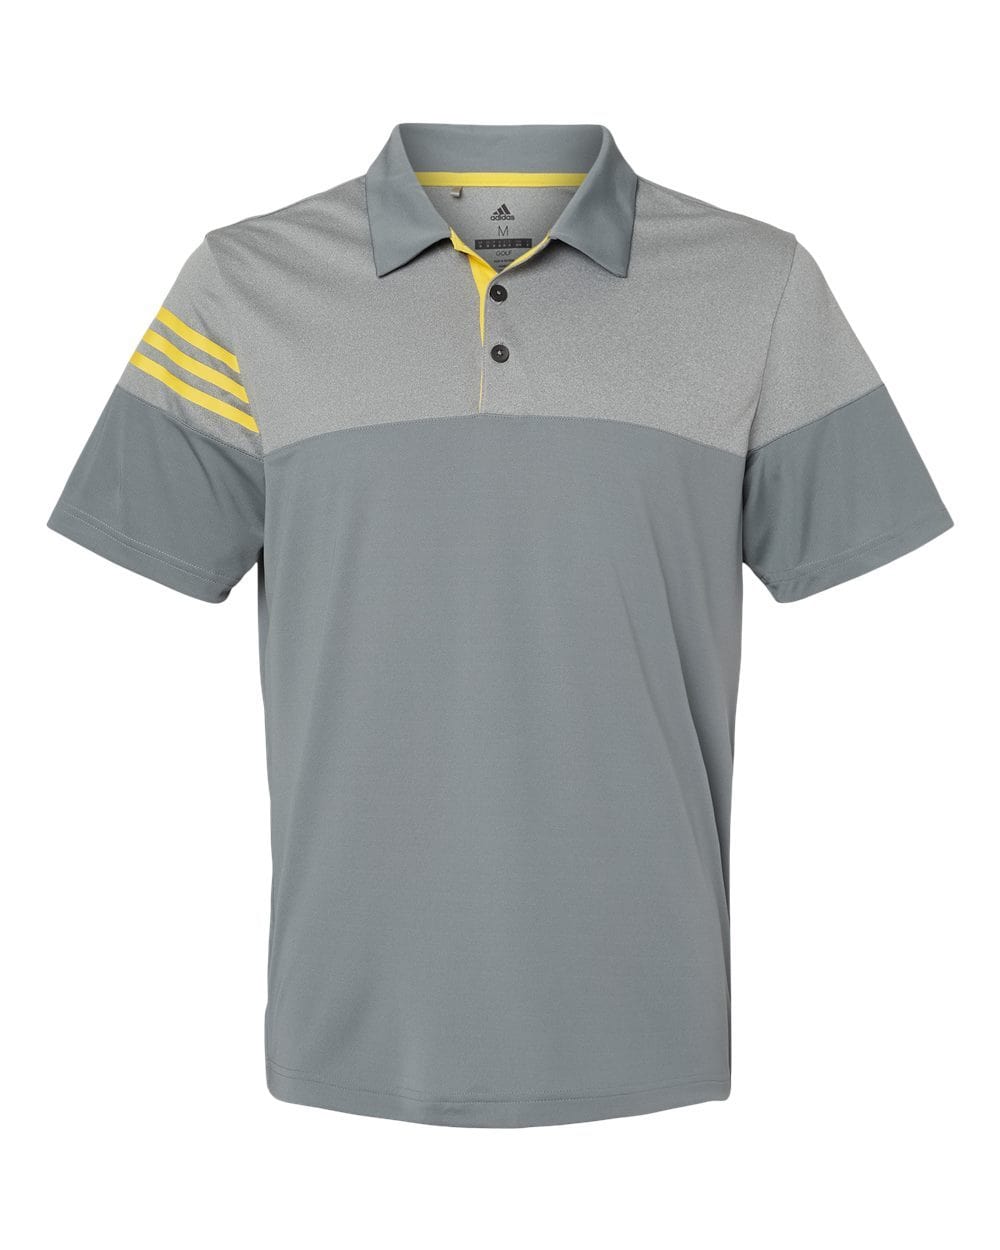 adidas Polos S / Vista Grey/EQT Yellow adidas - Men's Heathered 3-Stripes Colorblock Sport Shirt